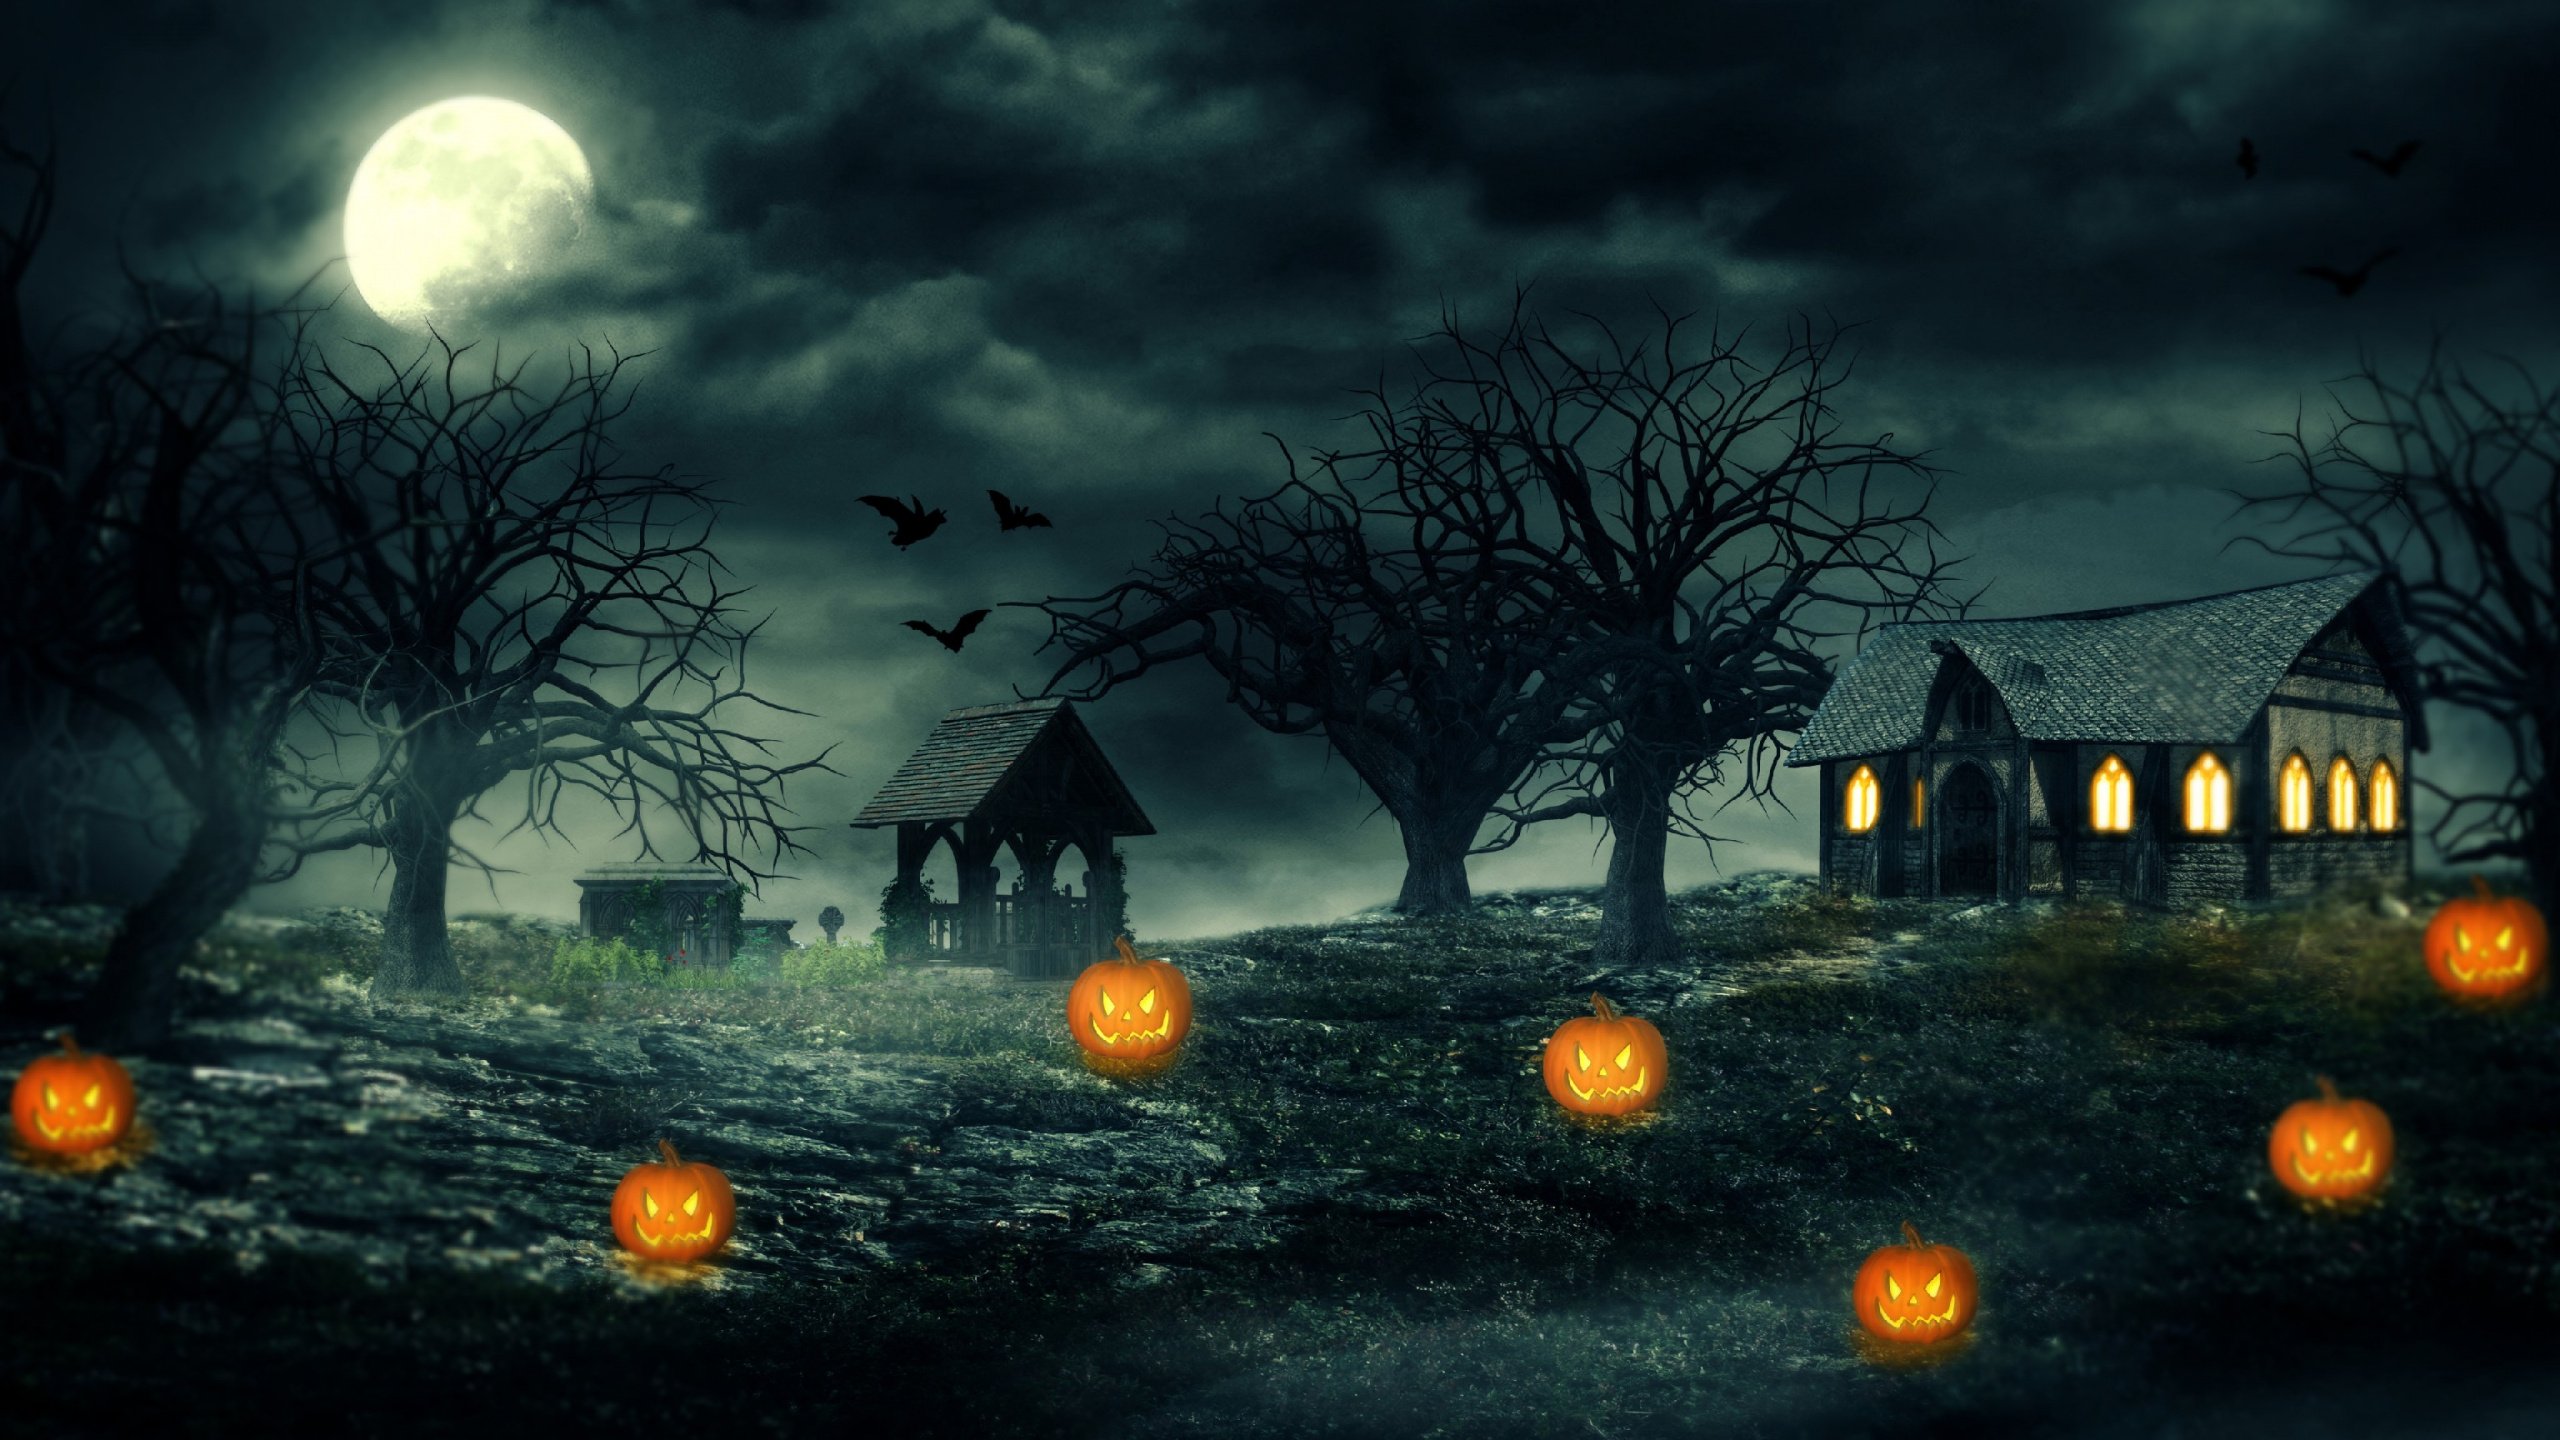 Halloween WQHD, QHD, 16:9 Wallpaper, HD Halloween 2560x1440 Background, Free Image Download